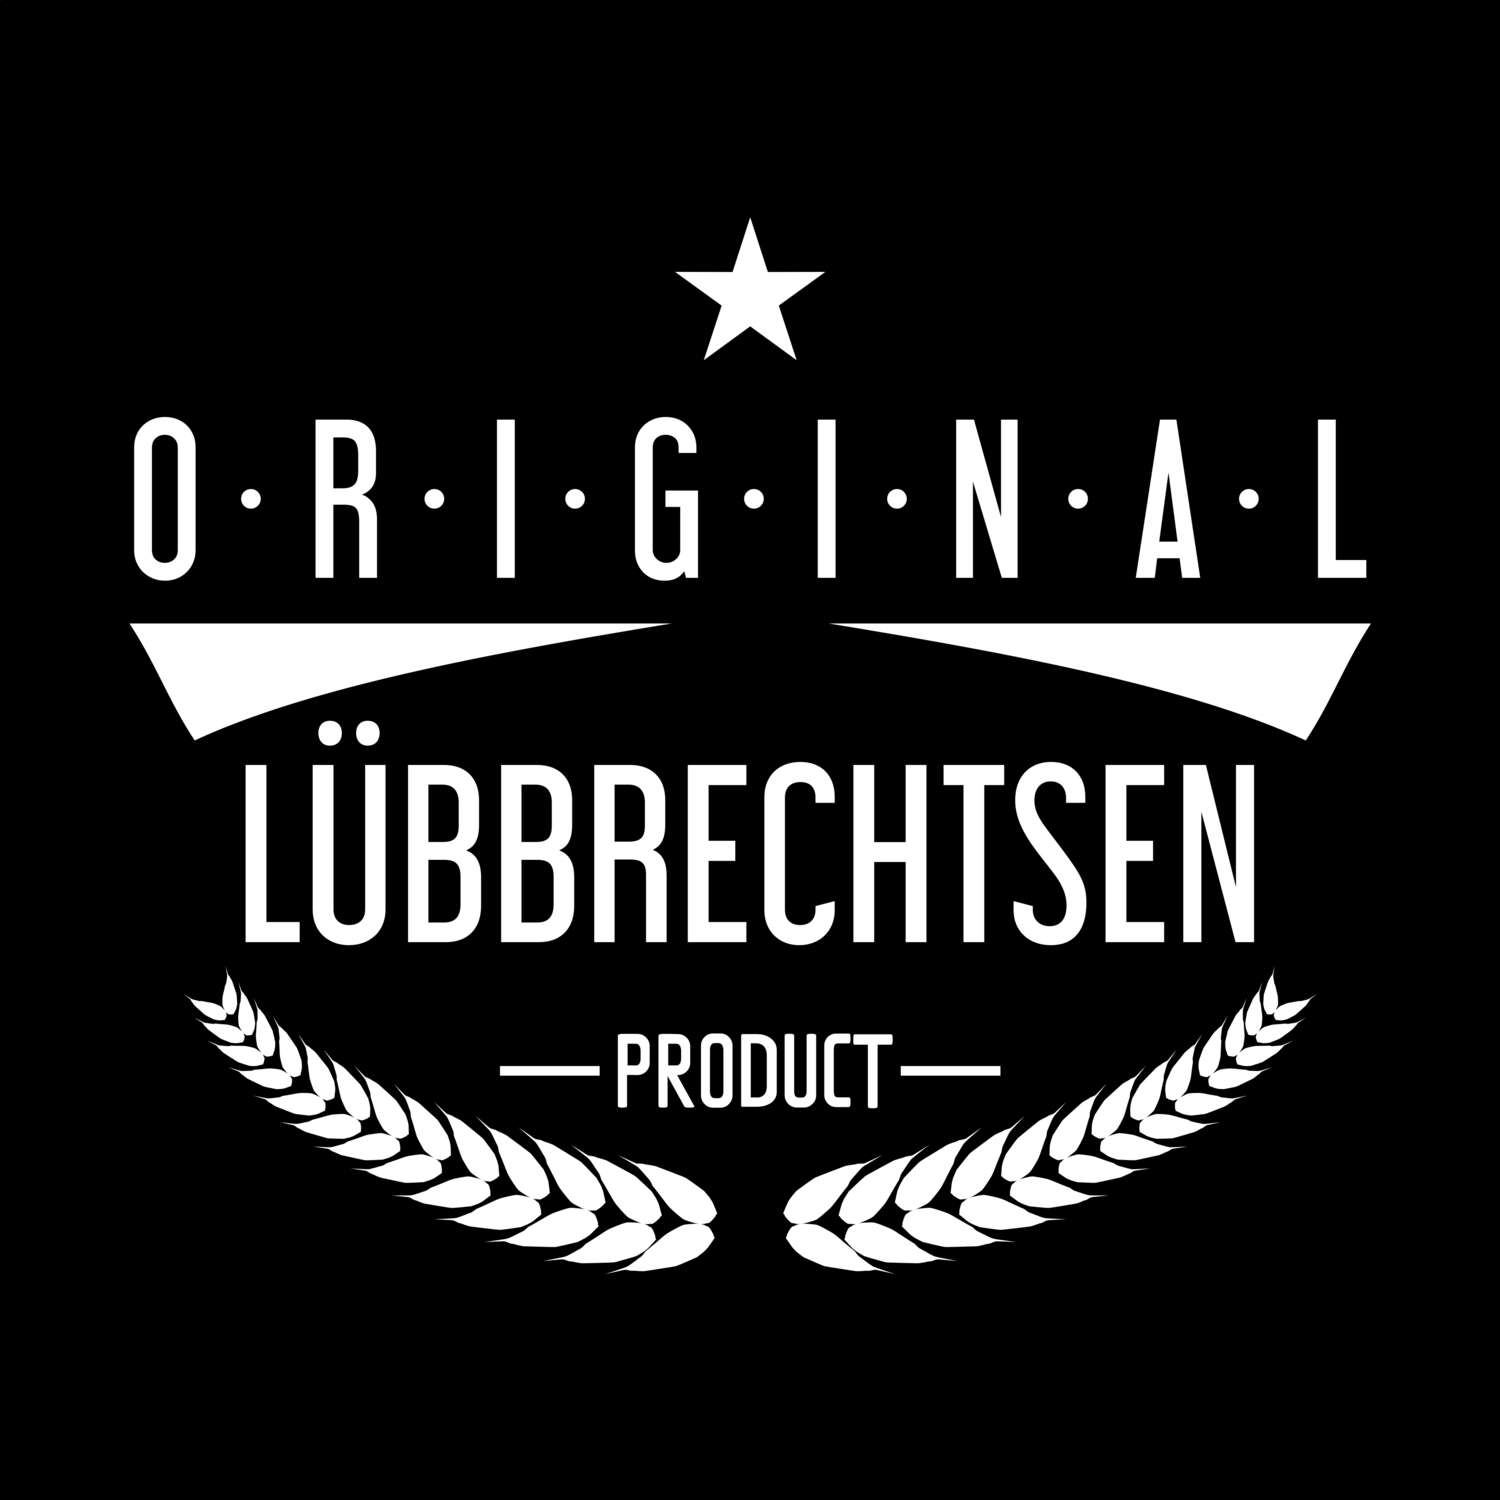 Lübbrechtsen T-Shirt »Original Product«